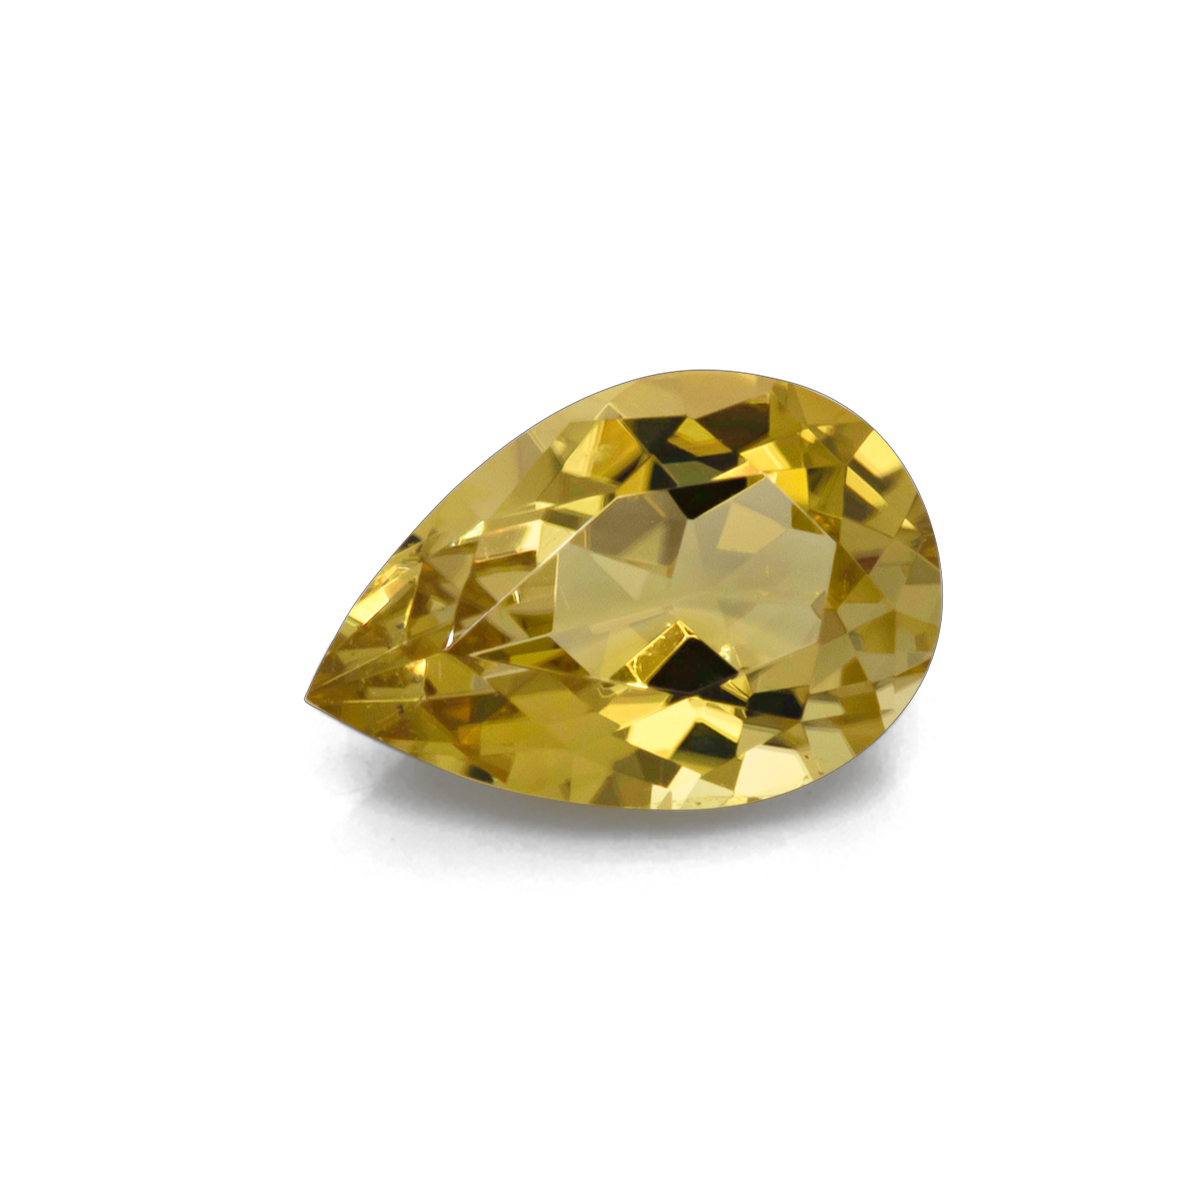 Tourmaline - yellow, pearshape, 9x6 mm, 1.25 cts, No. TR101318